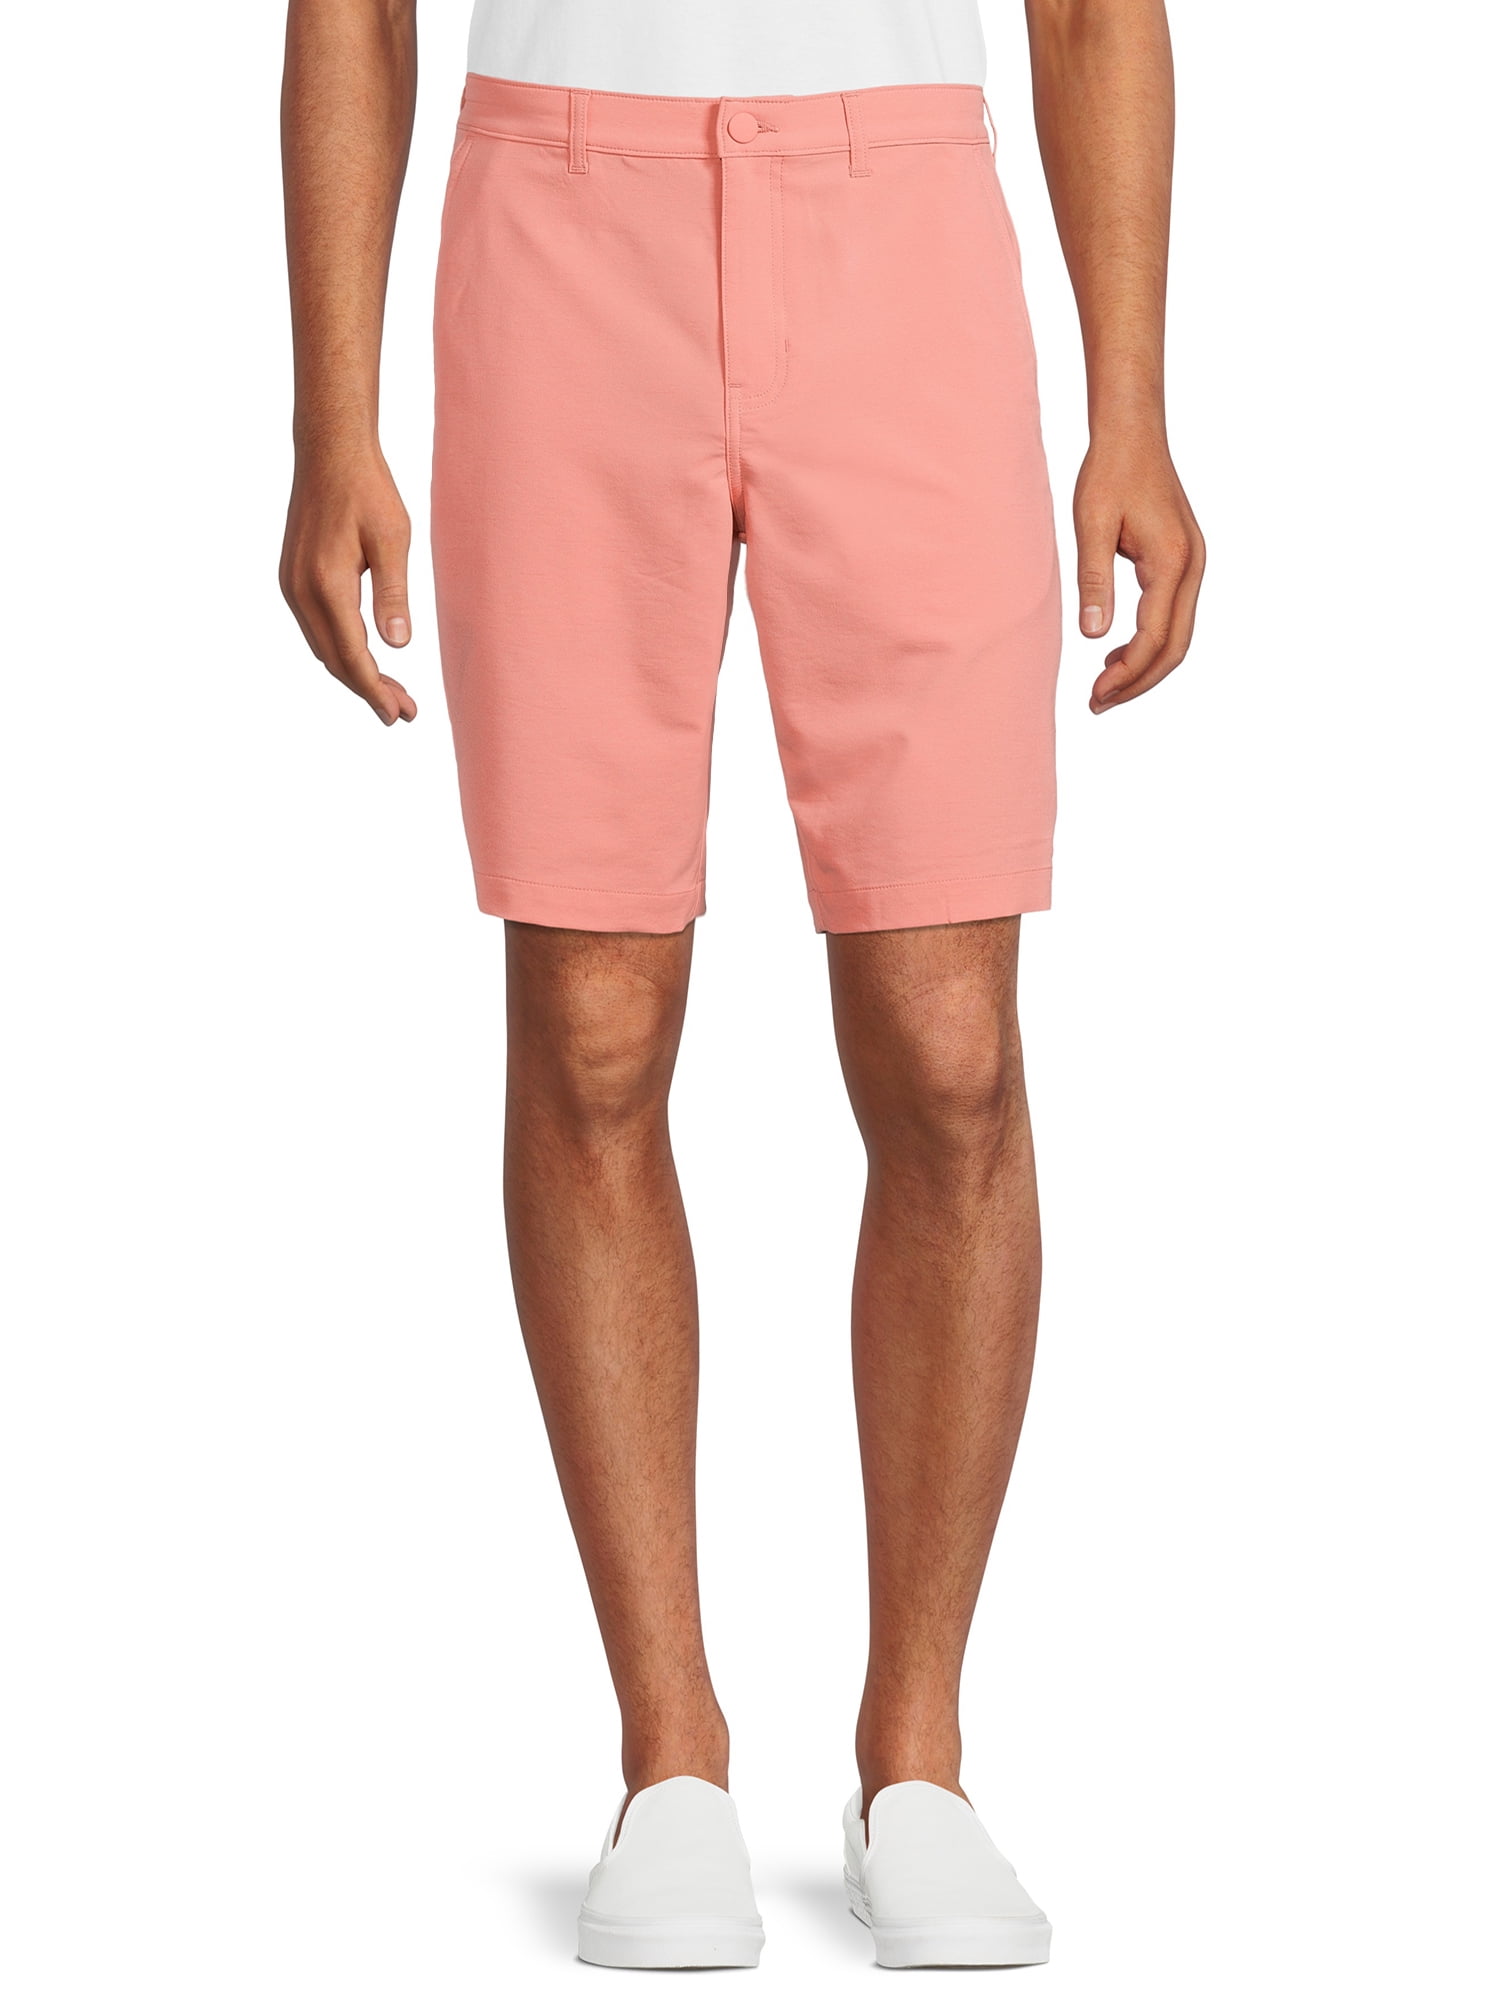 Walmart Versailles - Assorted George brand men's shorts were $14.88 now  only $11.50!